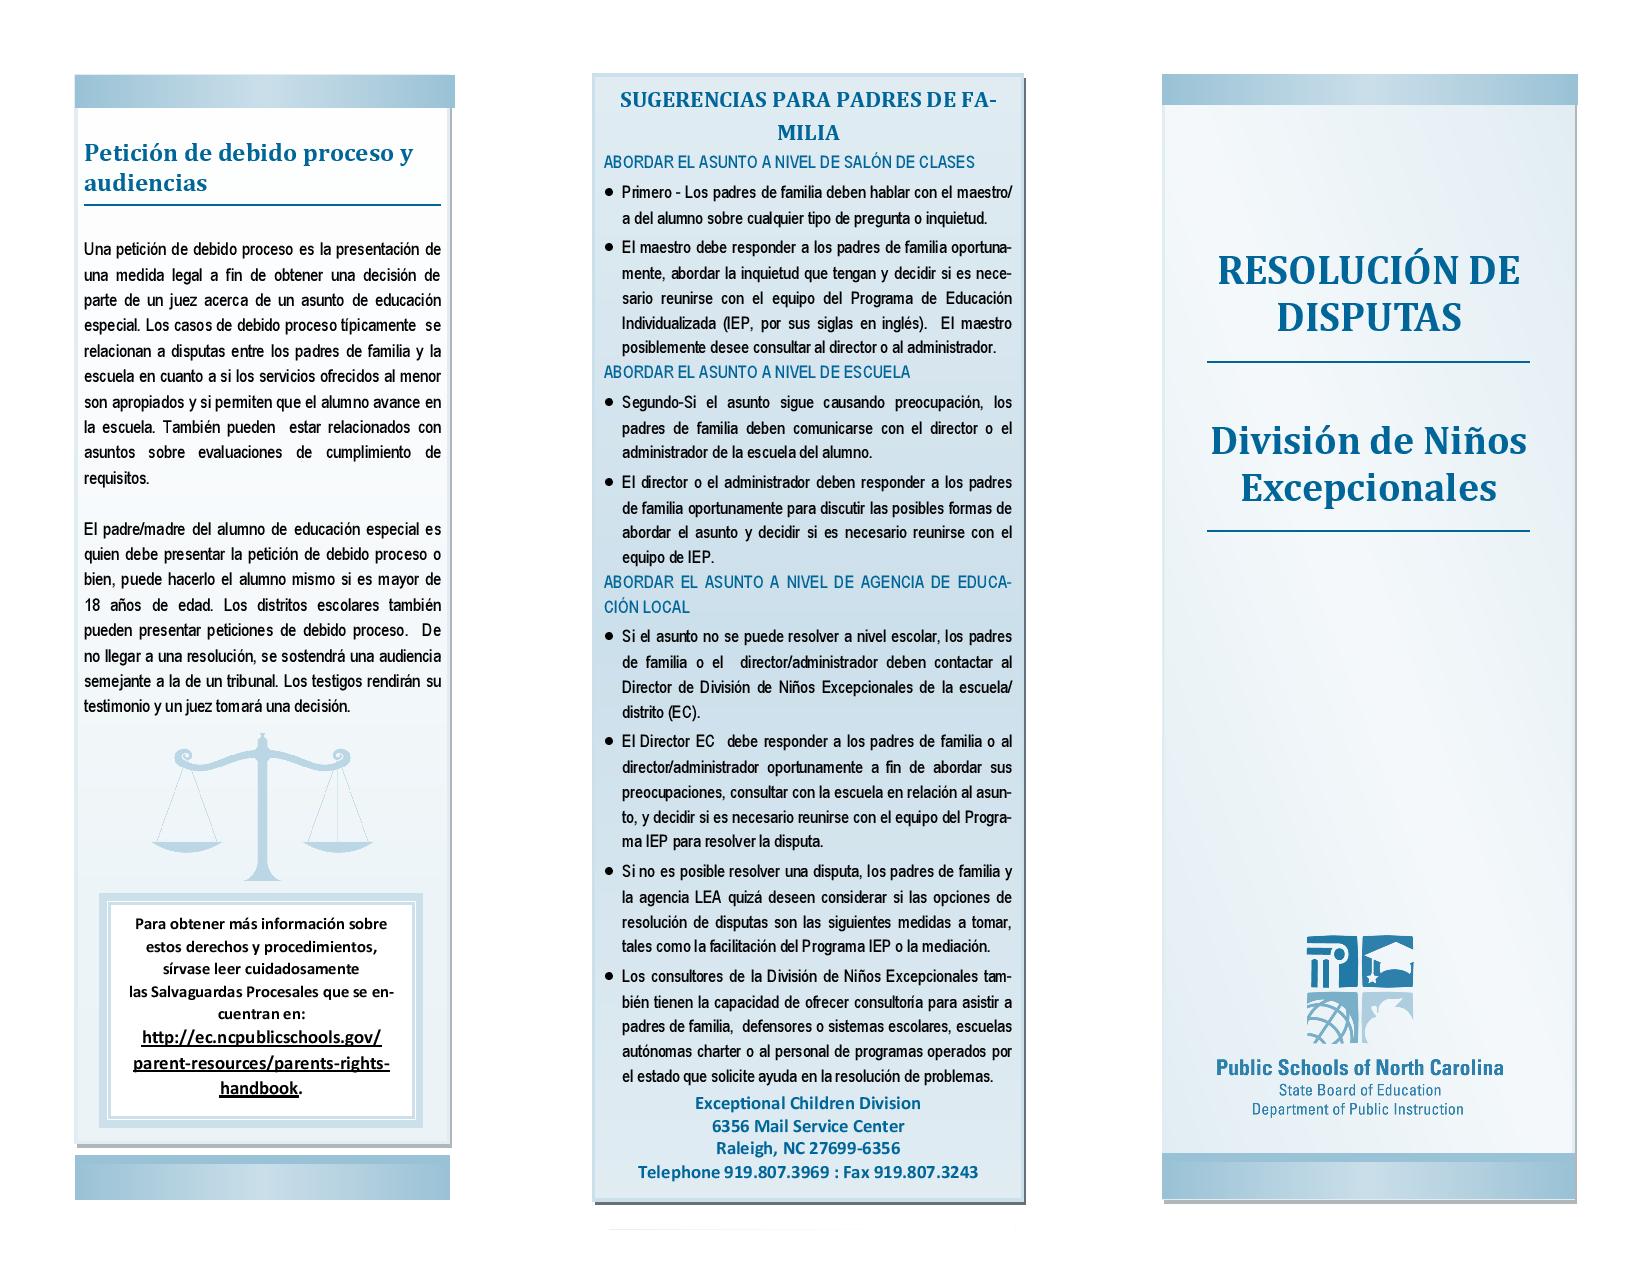 image of spanish dispute resolution brochure